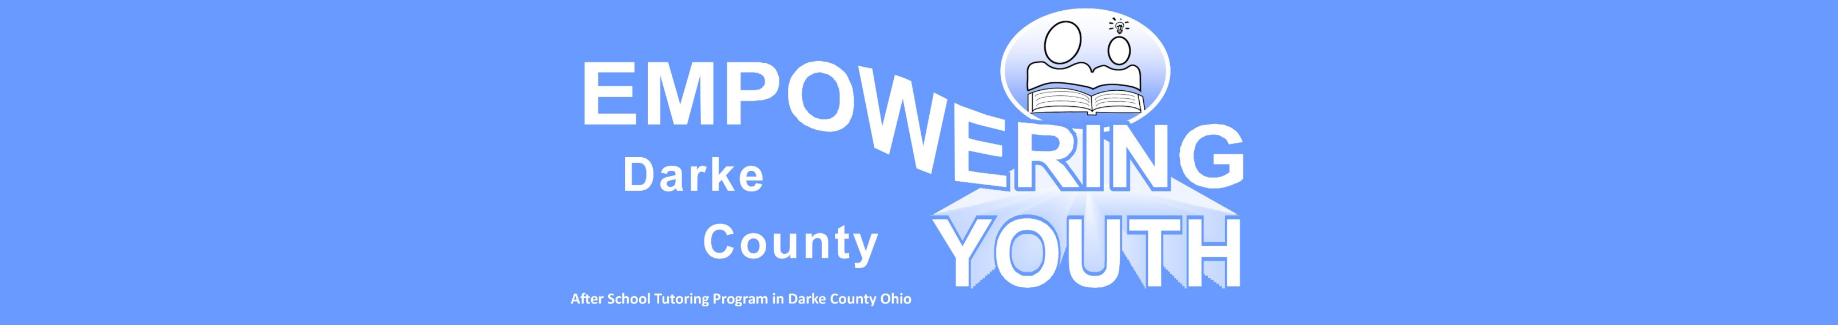 empower darke county youth head photo